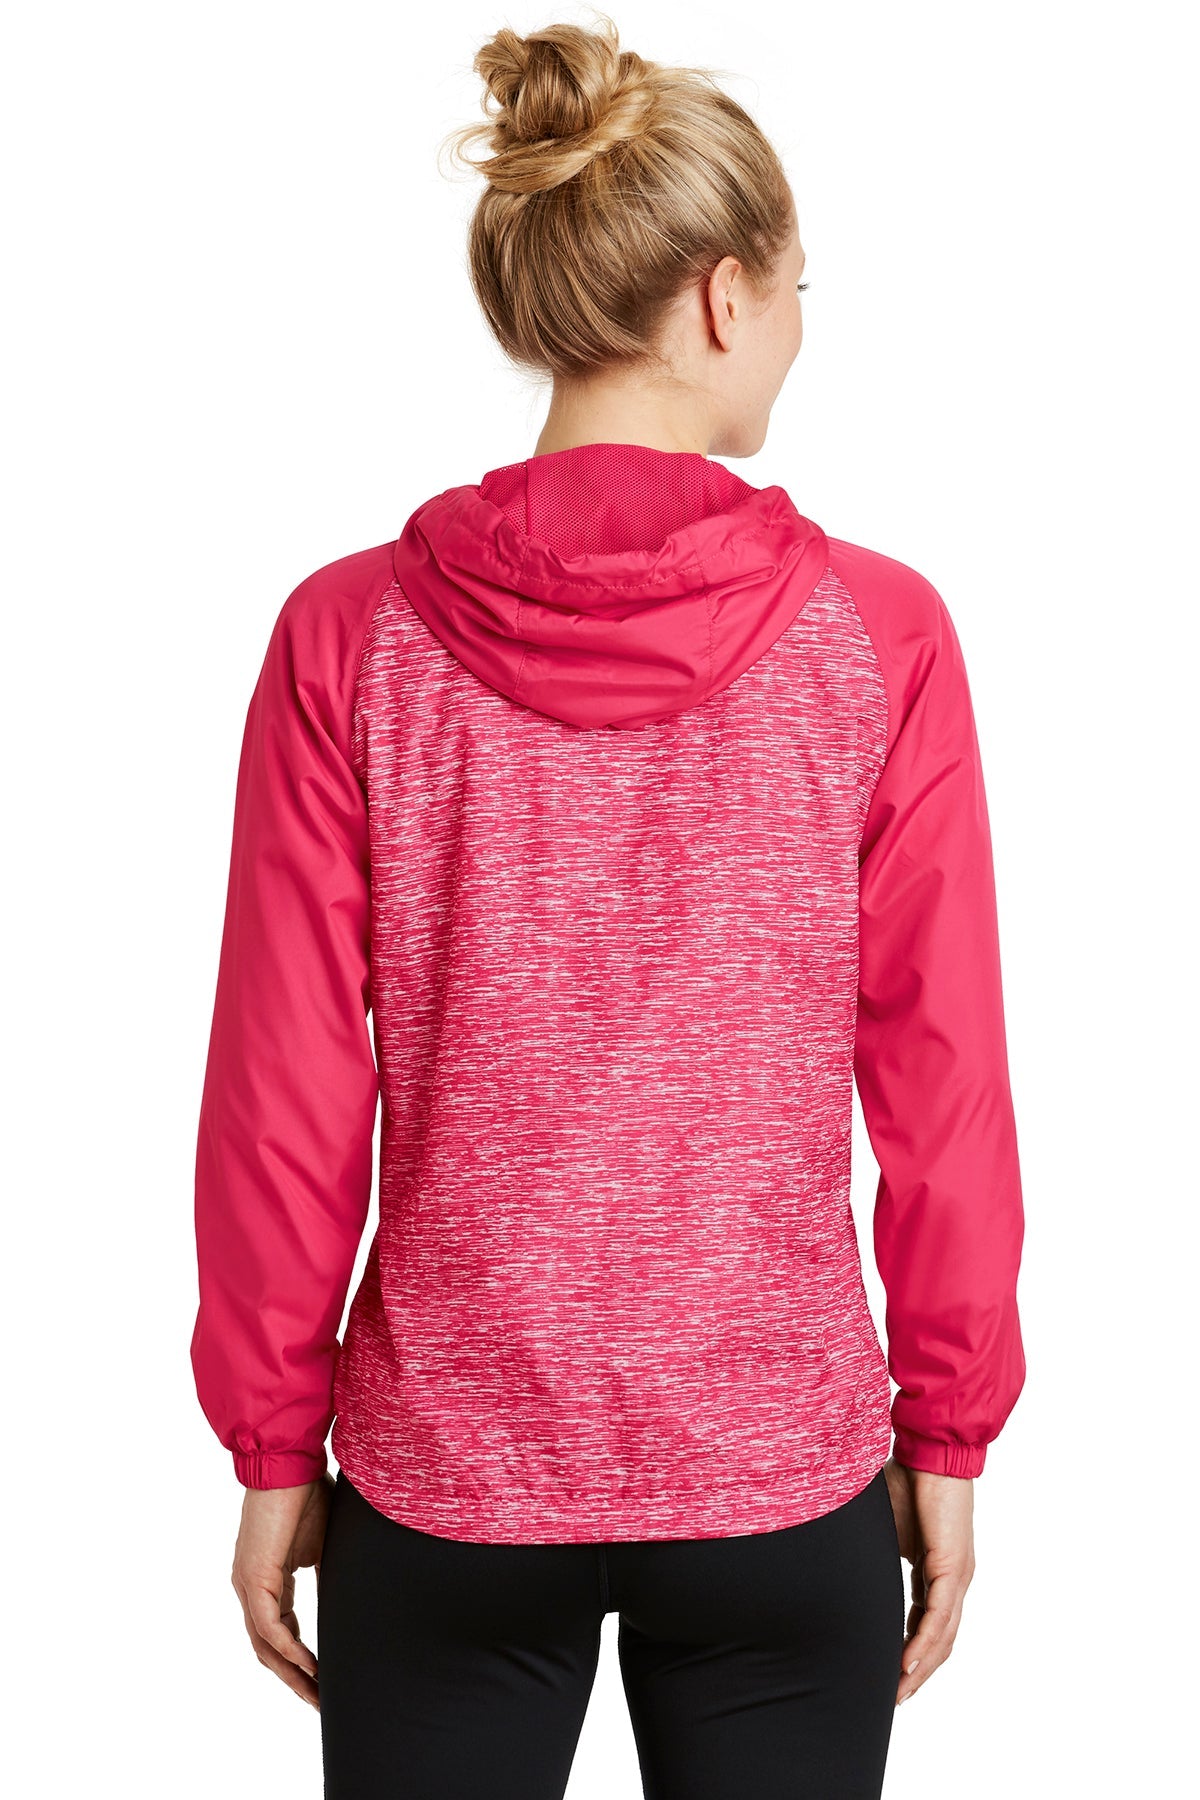 sport-tek_lst40 _pink raspberry heather/ pink raspberry_company_logo_jackets